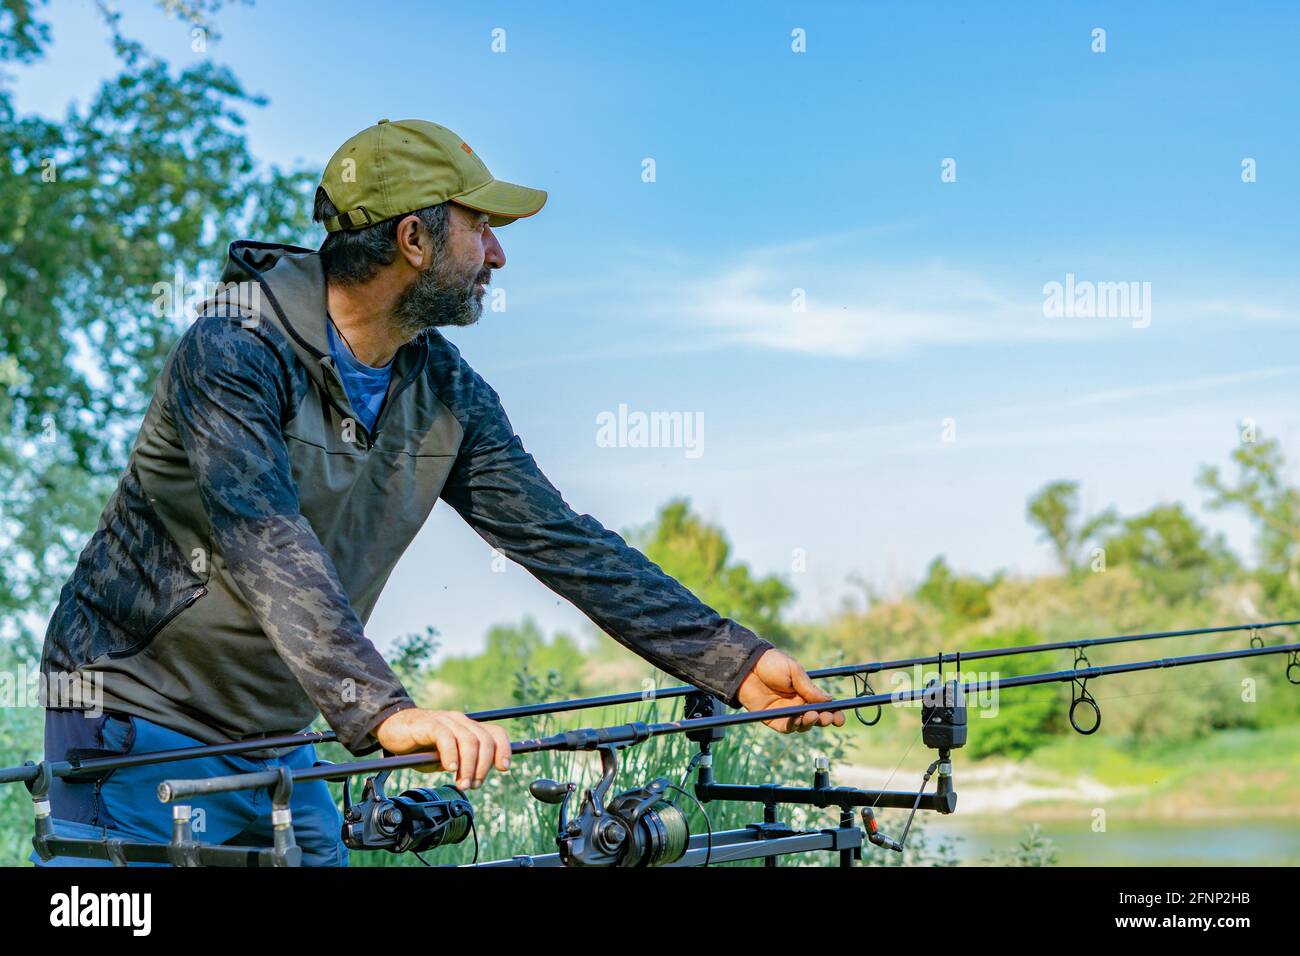 man preparing fishing equipment for a carp fishing session on the rive Stock Photo